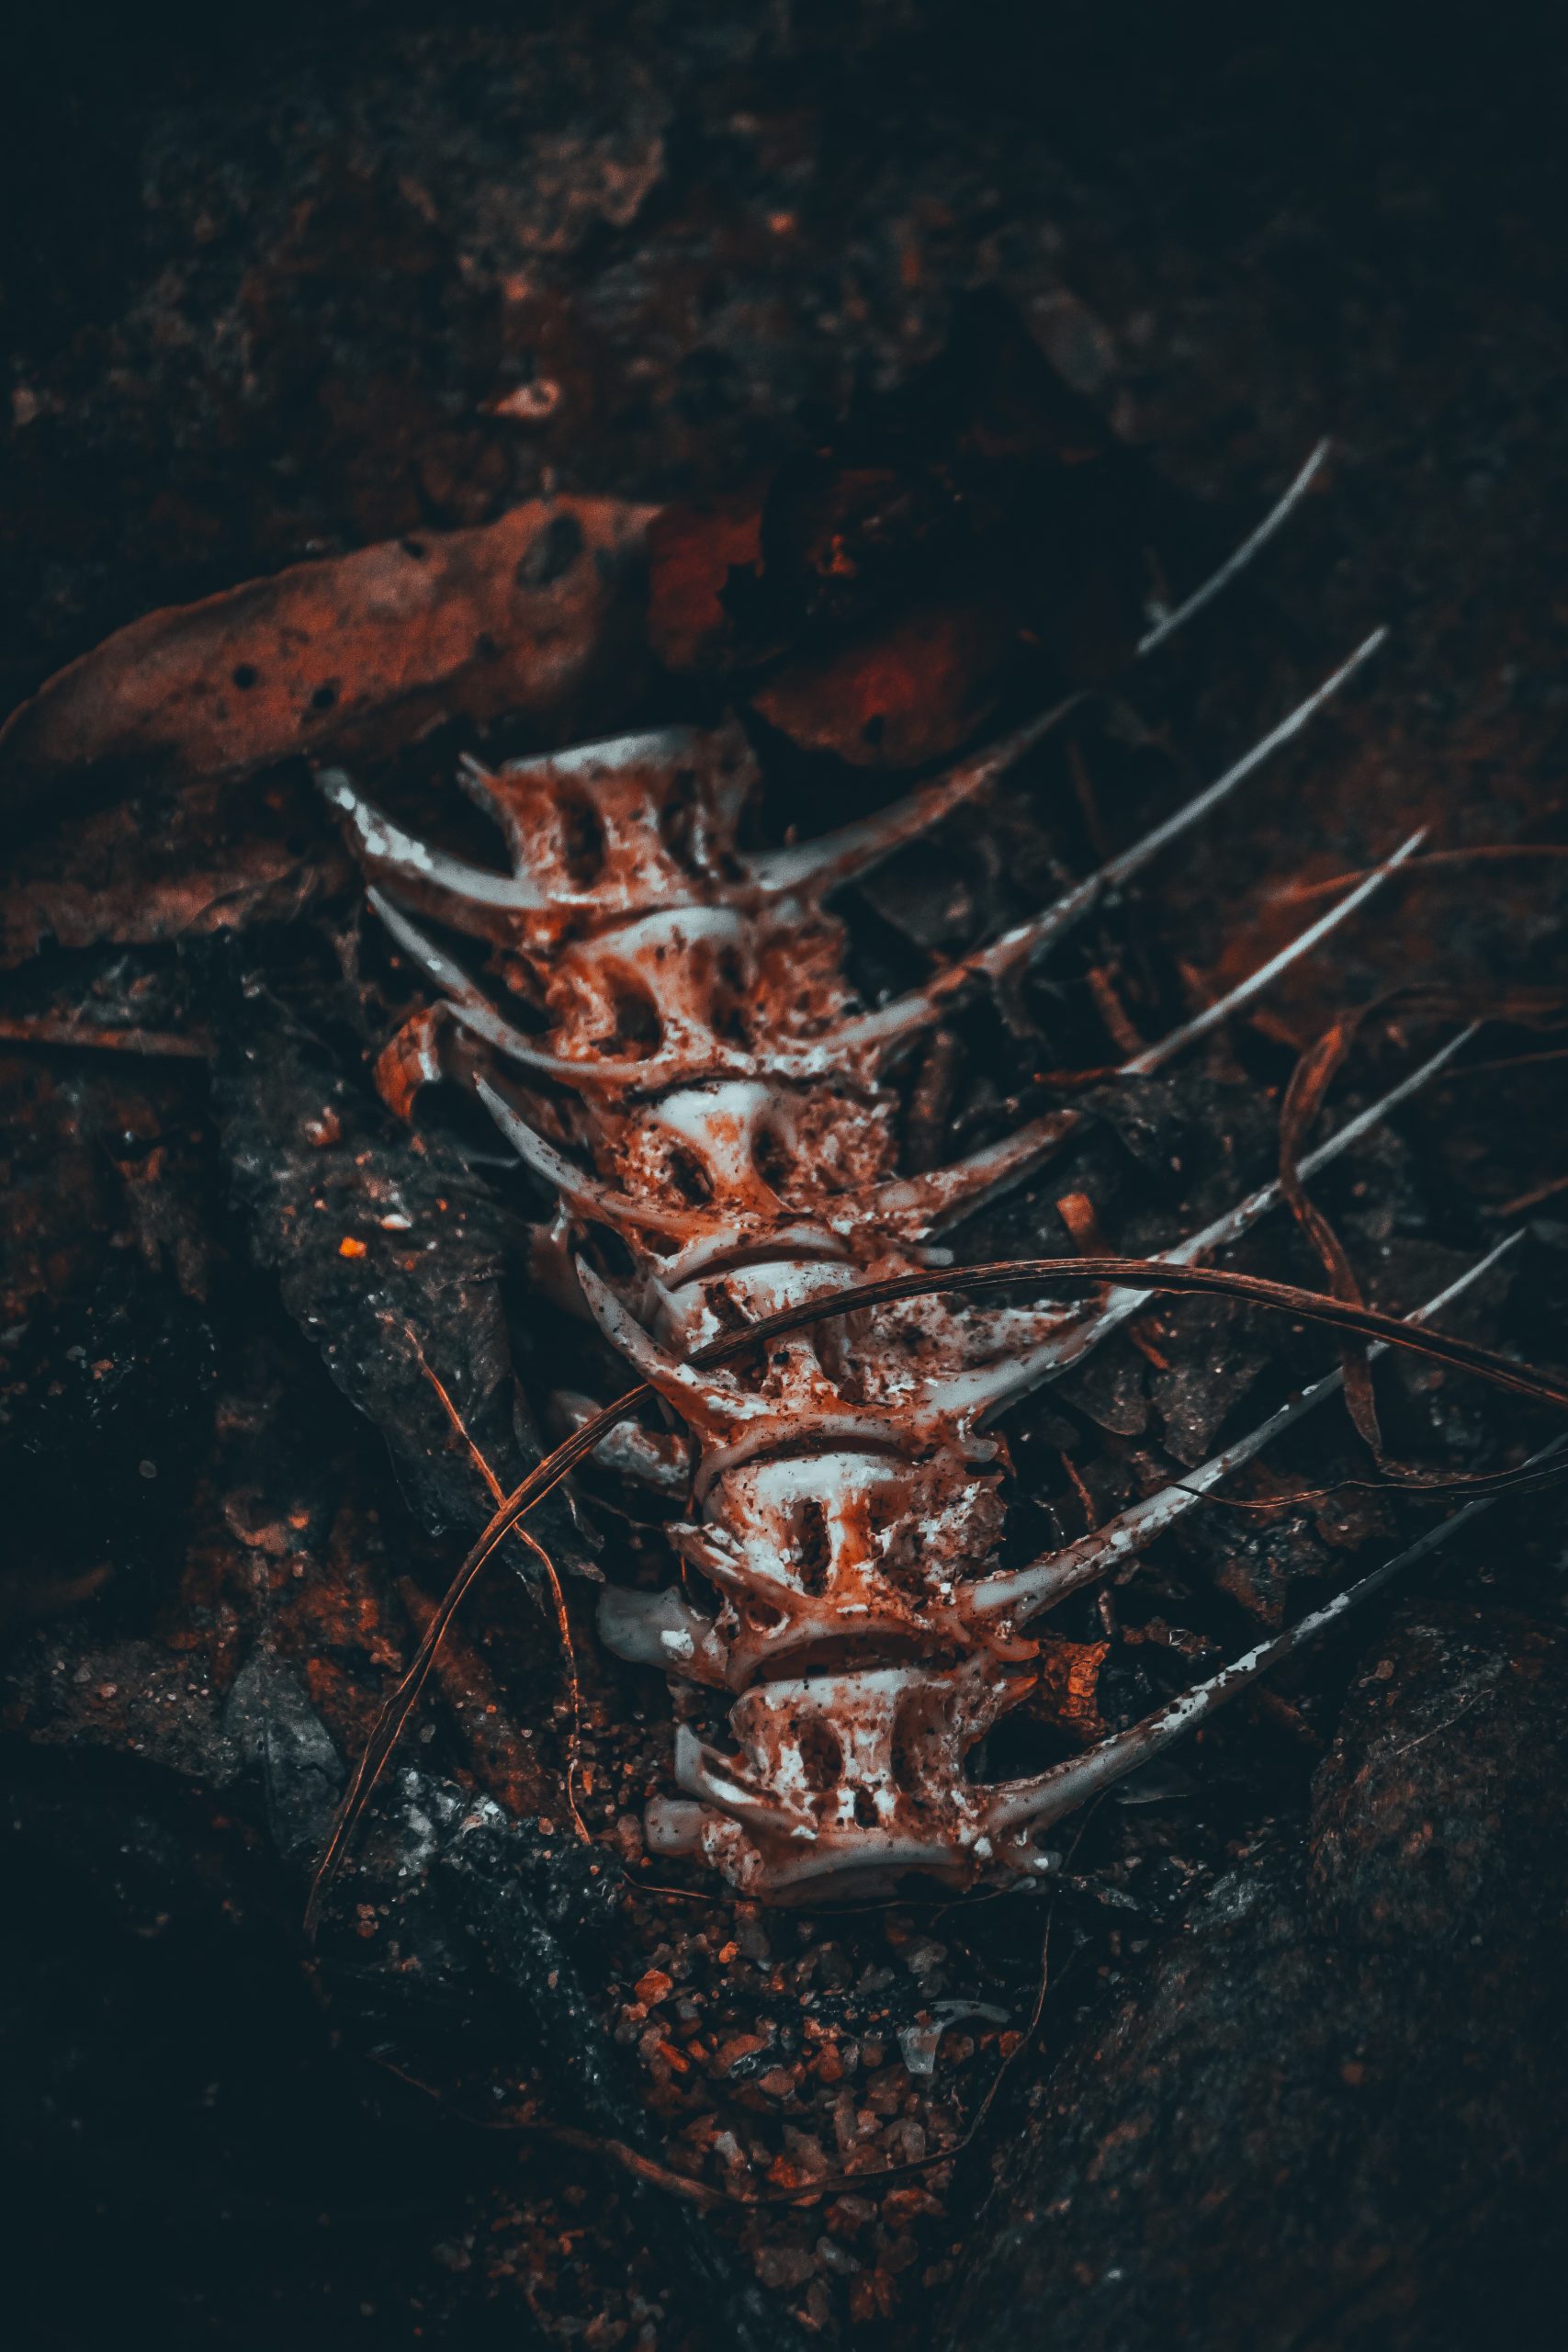 Bones of a creature